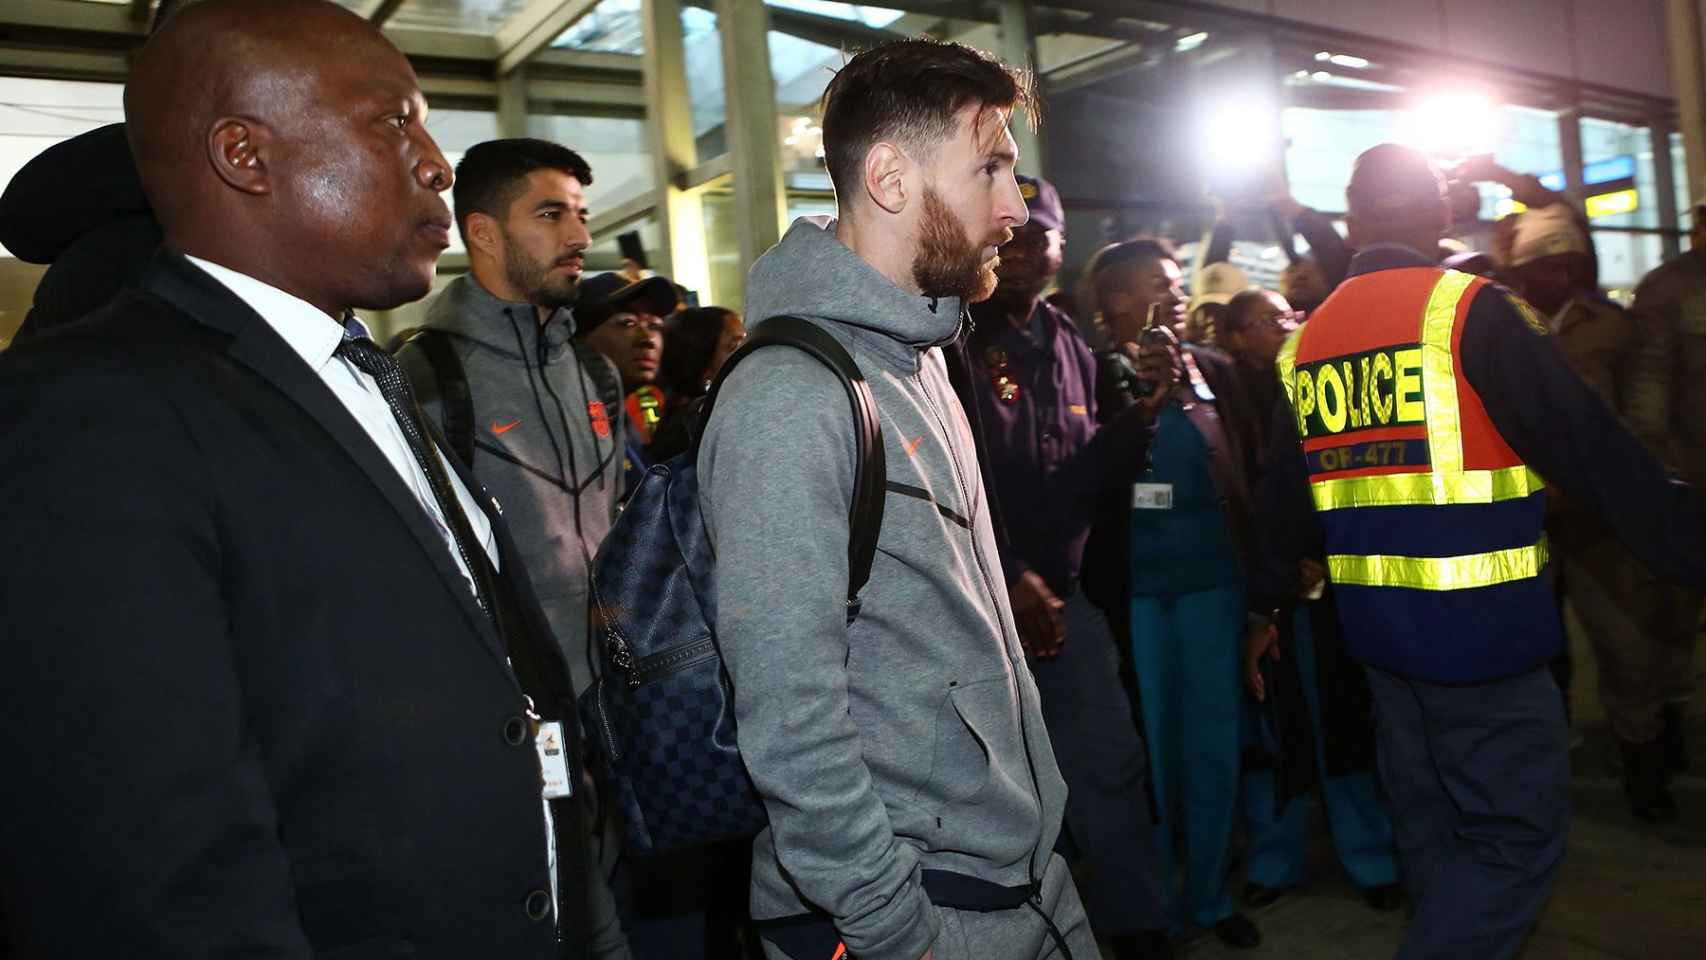 Leo Messi, en una imagen de archivo | REDES